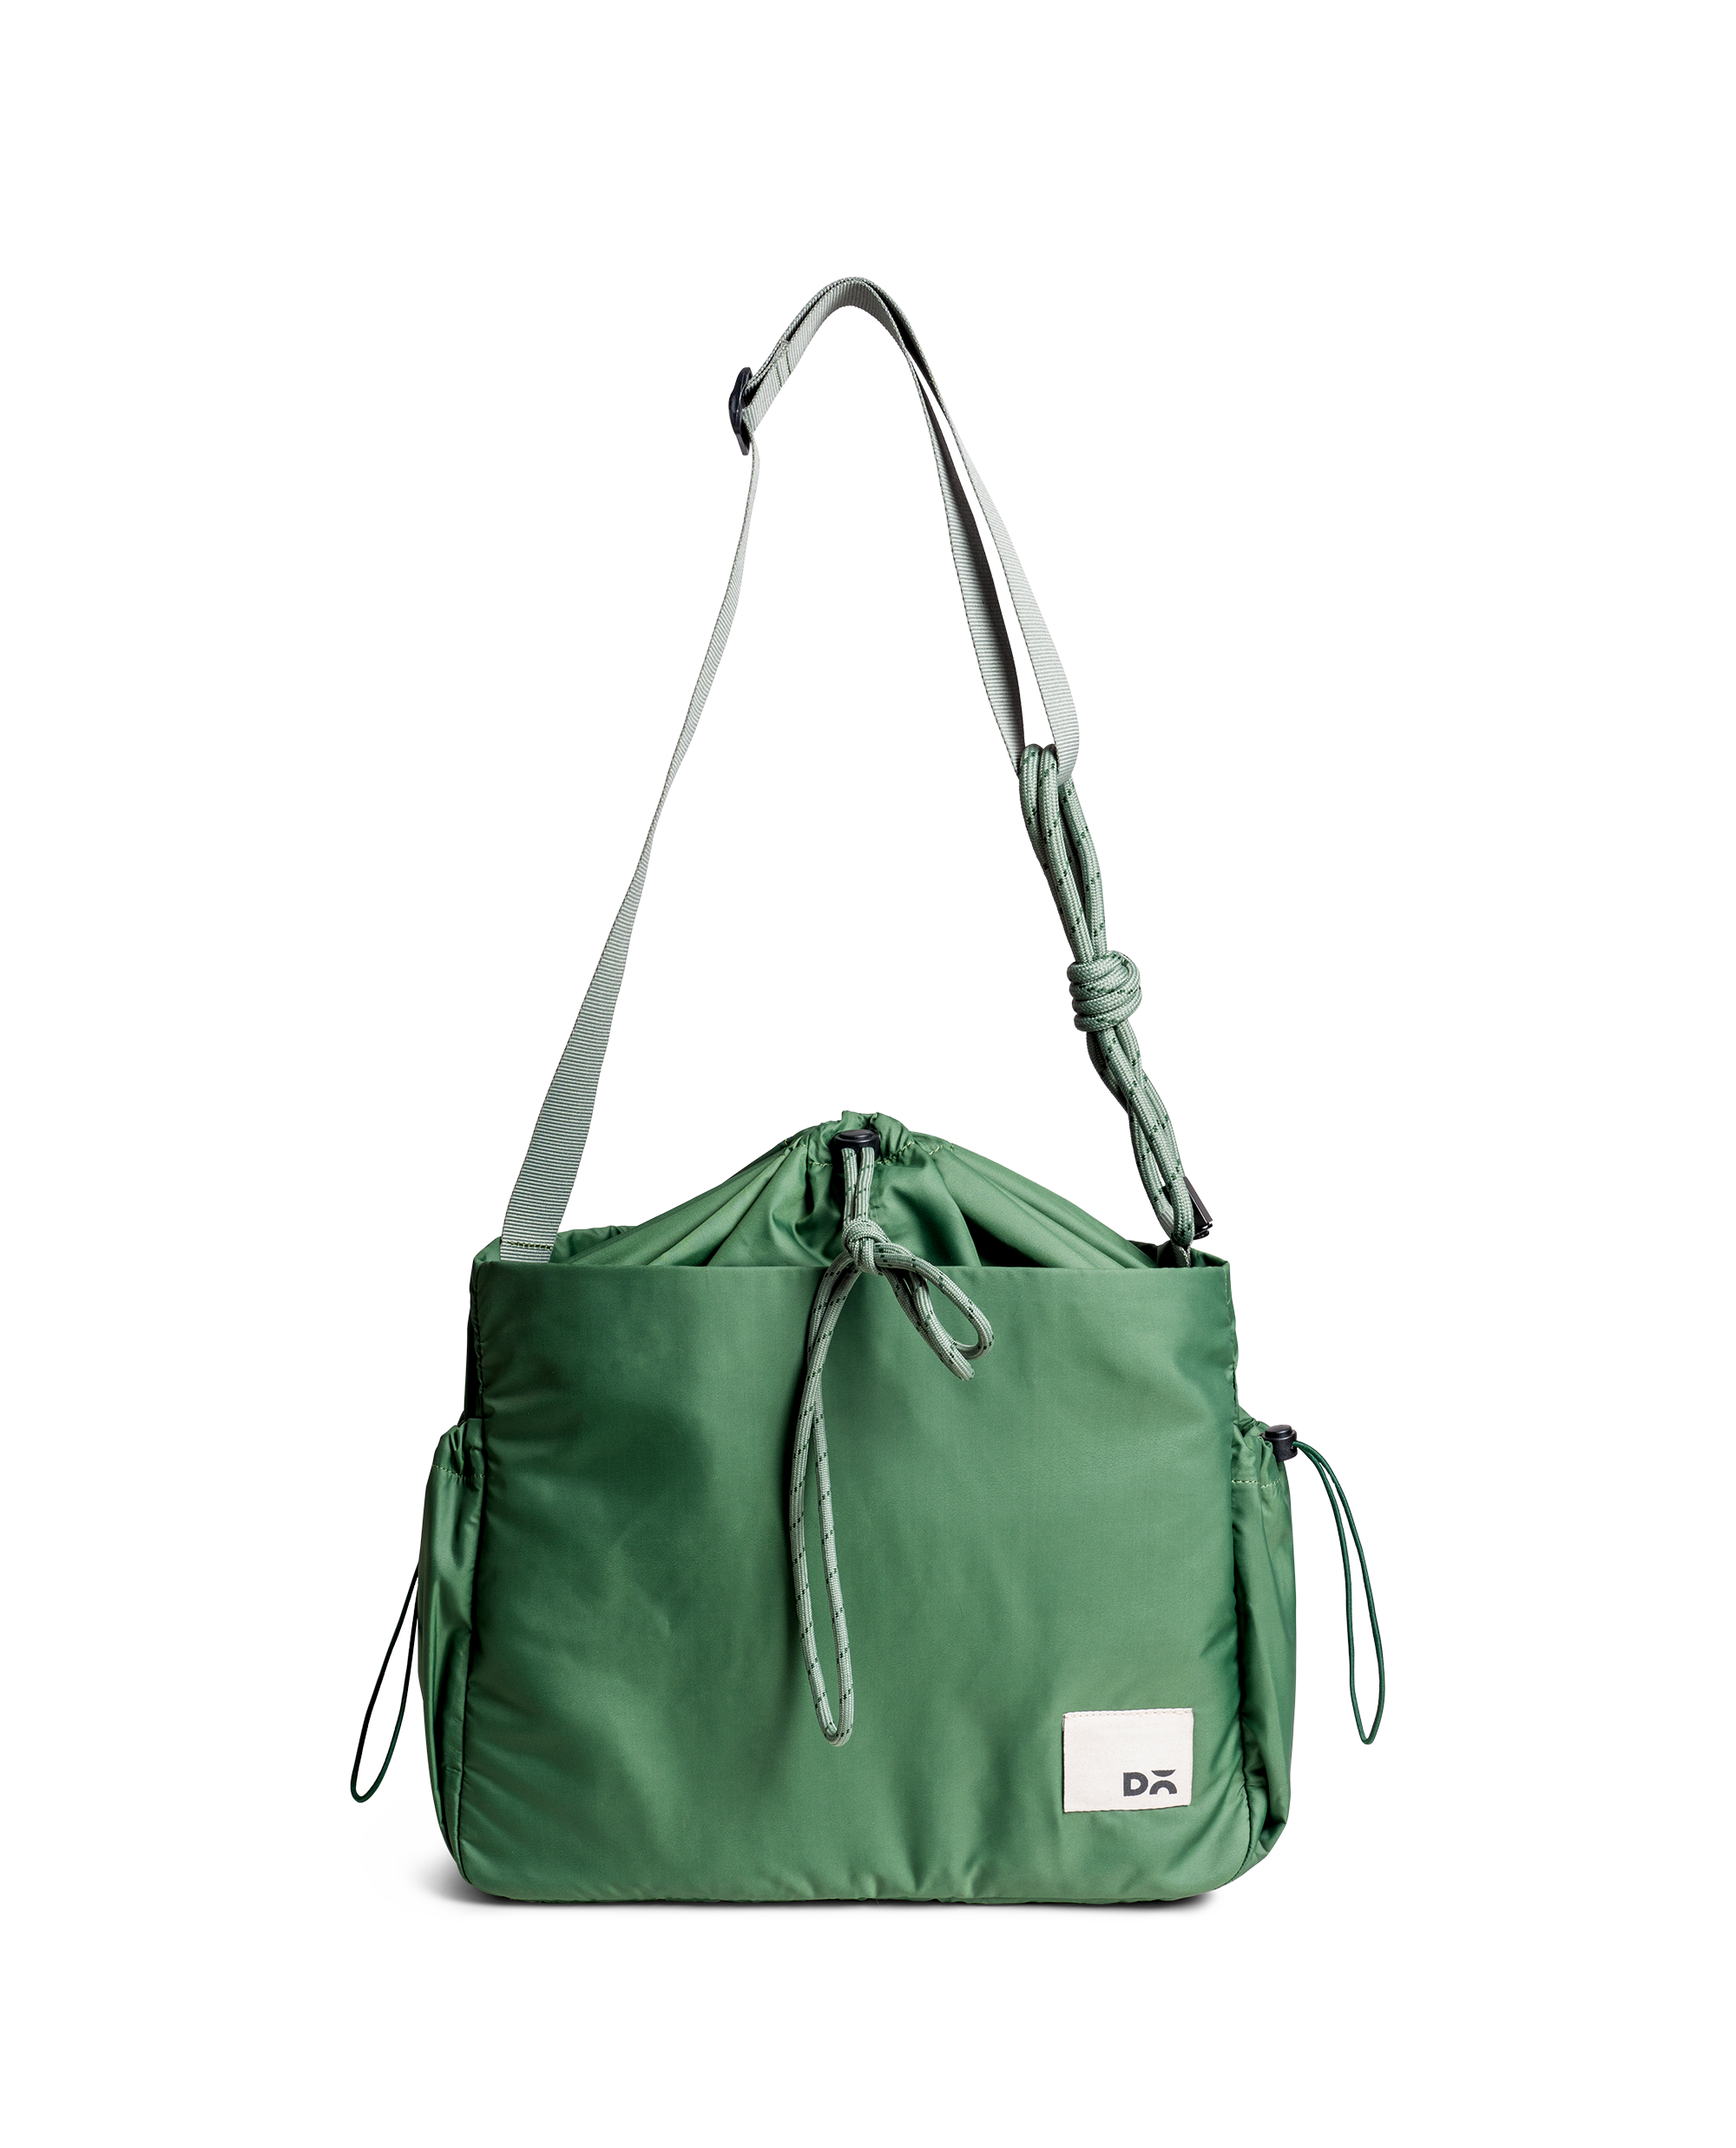 Buy Montana West Tote Bag for Women Top Handle Satchel Purse Oversized  Shoulder Handbag Hobo Bags MWC-118BK, Black at Amazon.in